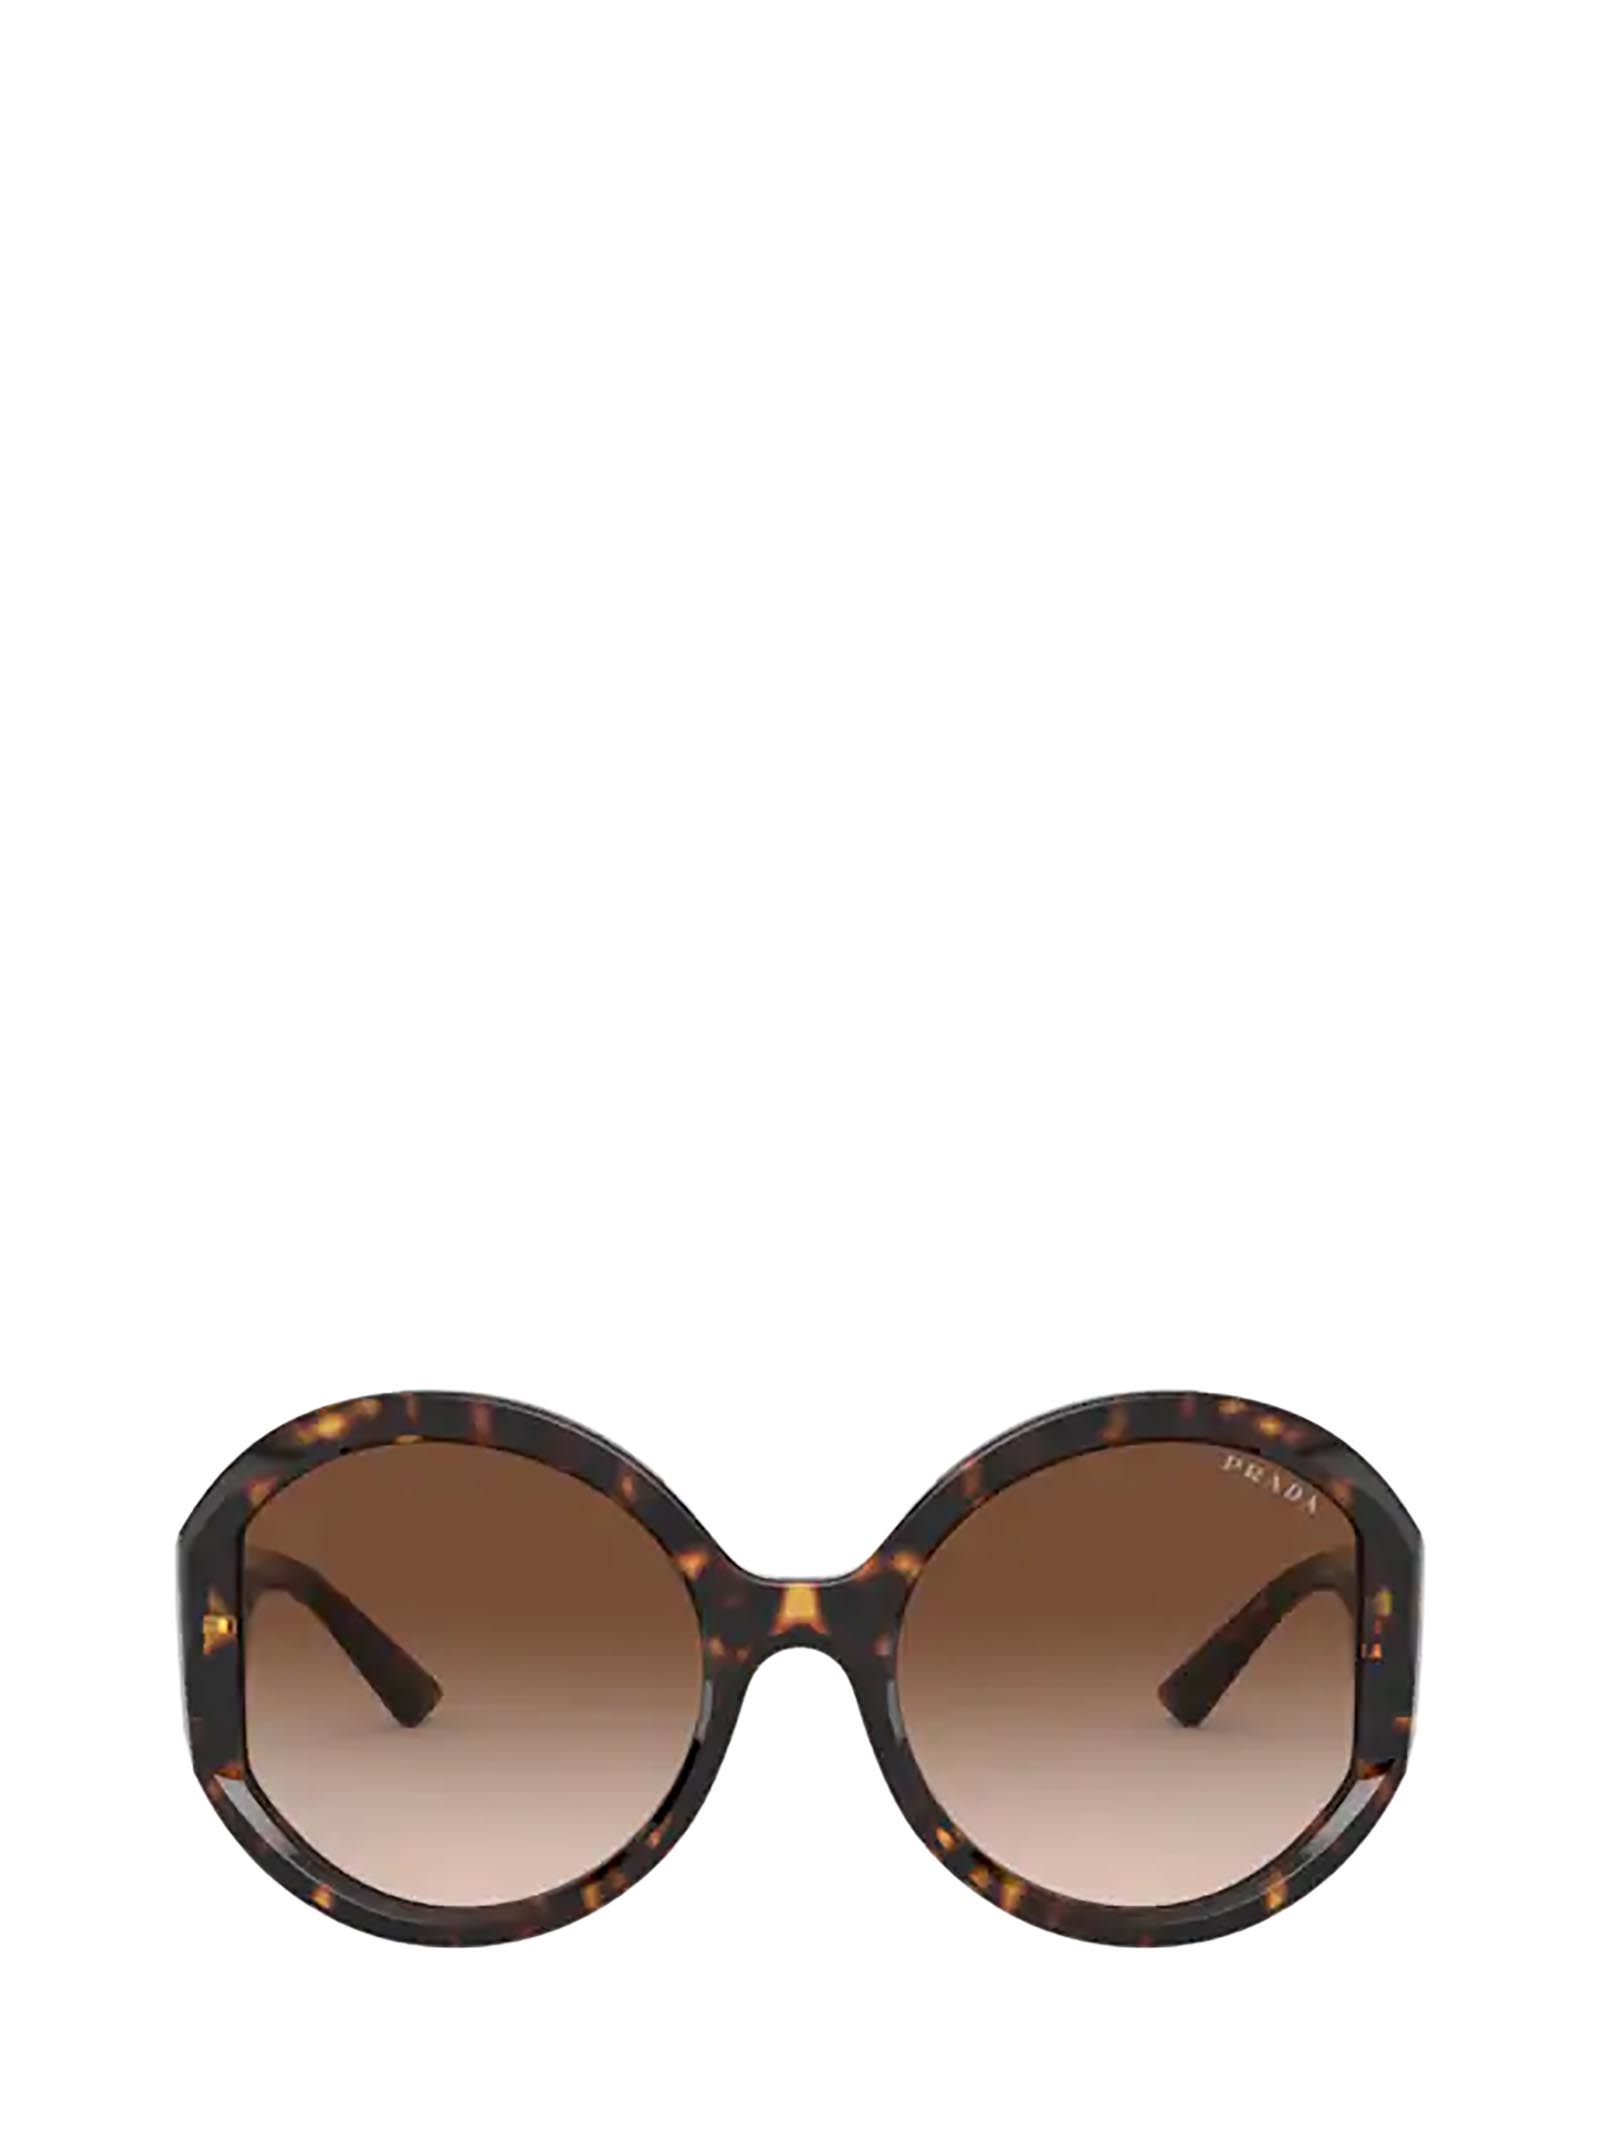 Prada Eyewear Prada Pr 22xs Havana Sunglasses